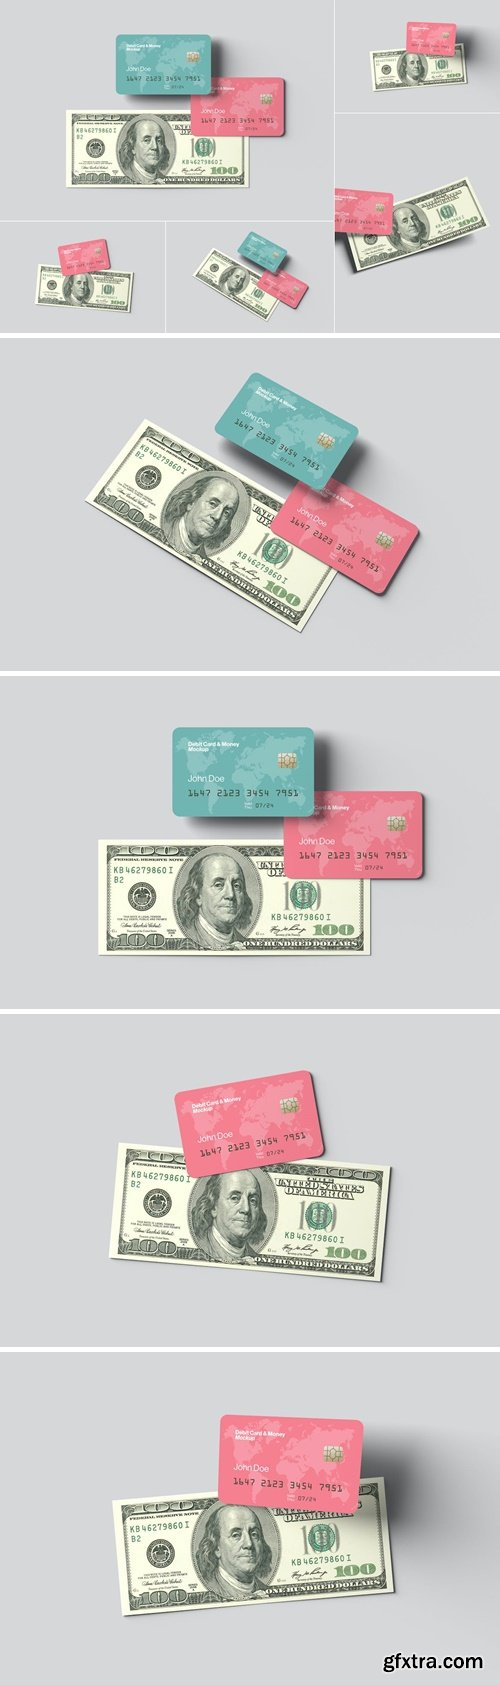 Debit Card and Money Mockups GZ9N8AQ